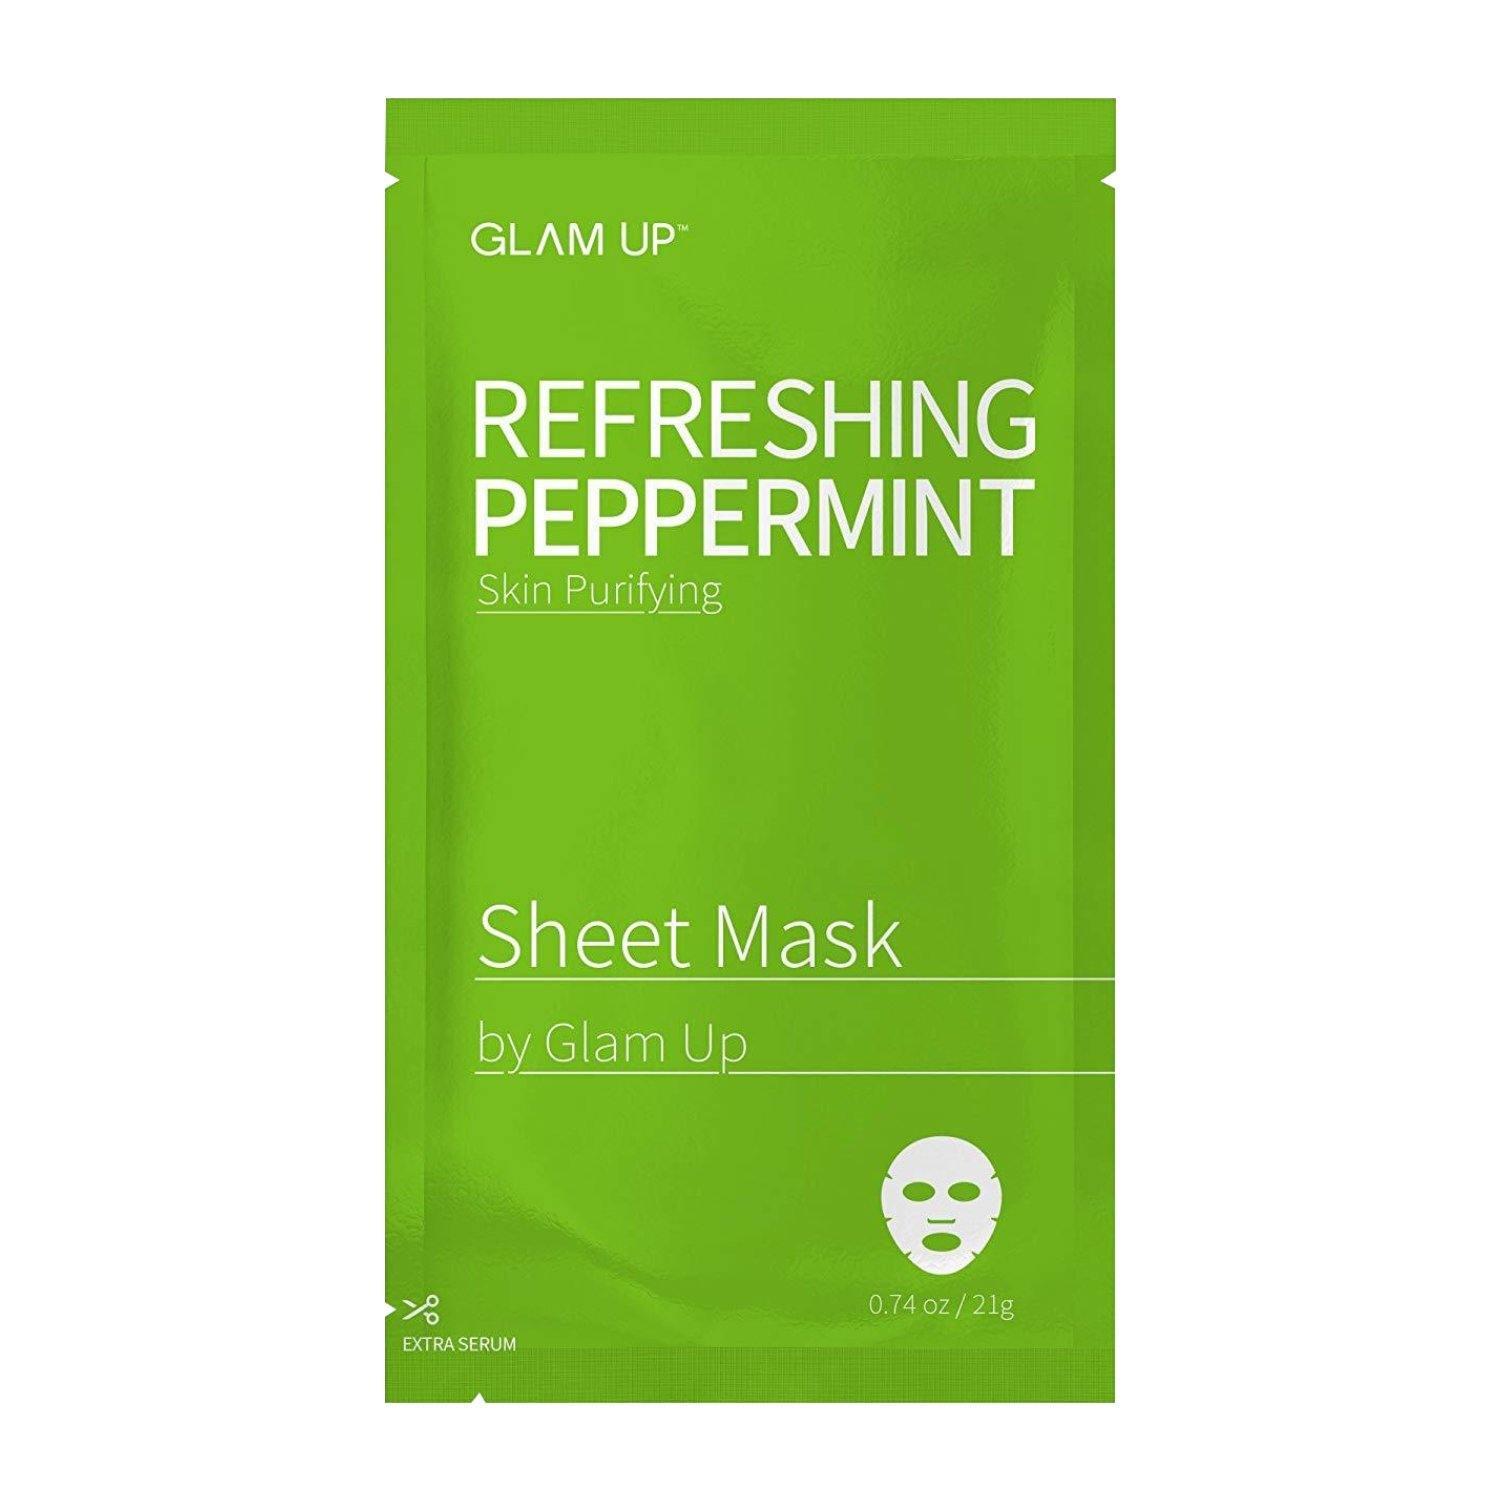 Refreshing Peppermint Sheet Mask